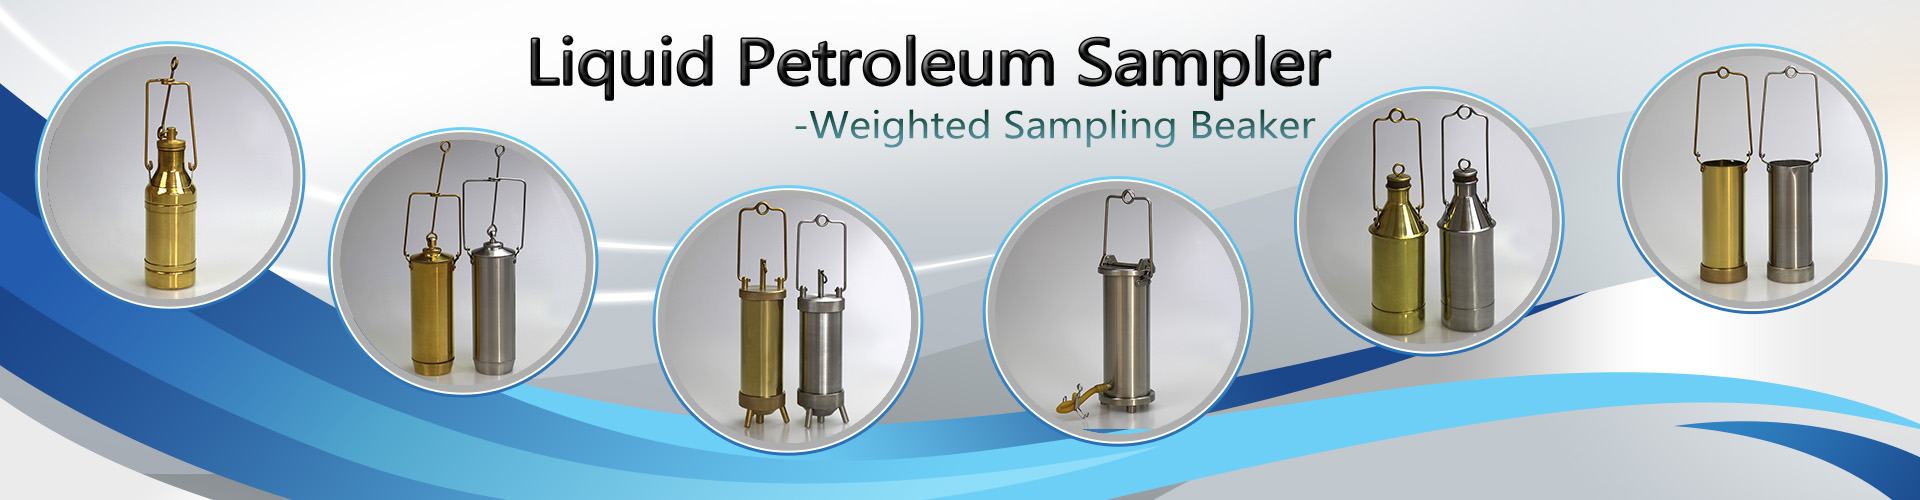 Petroleum Product Sampler